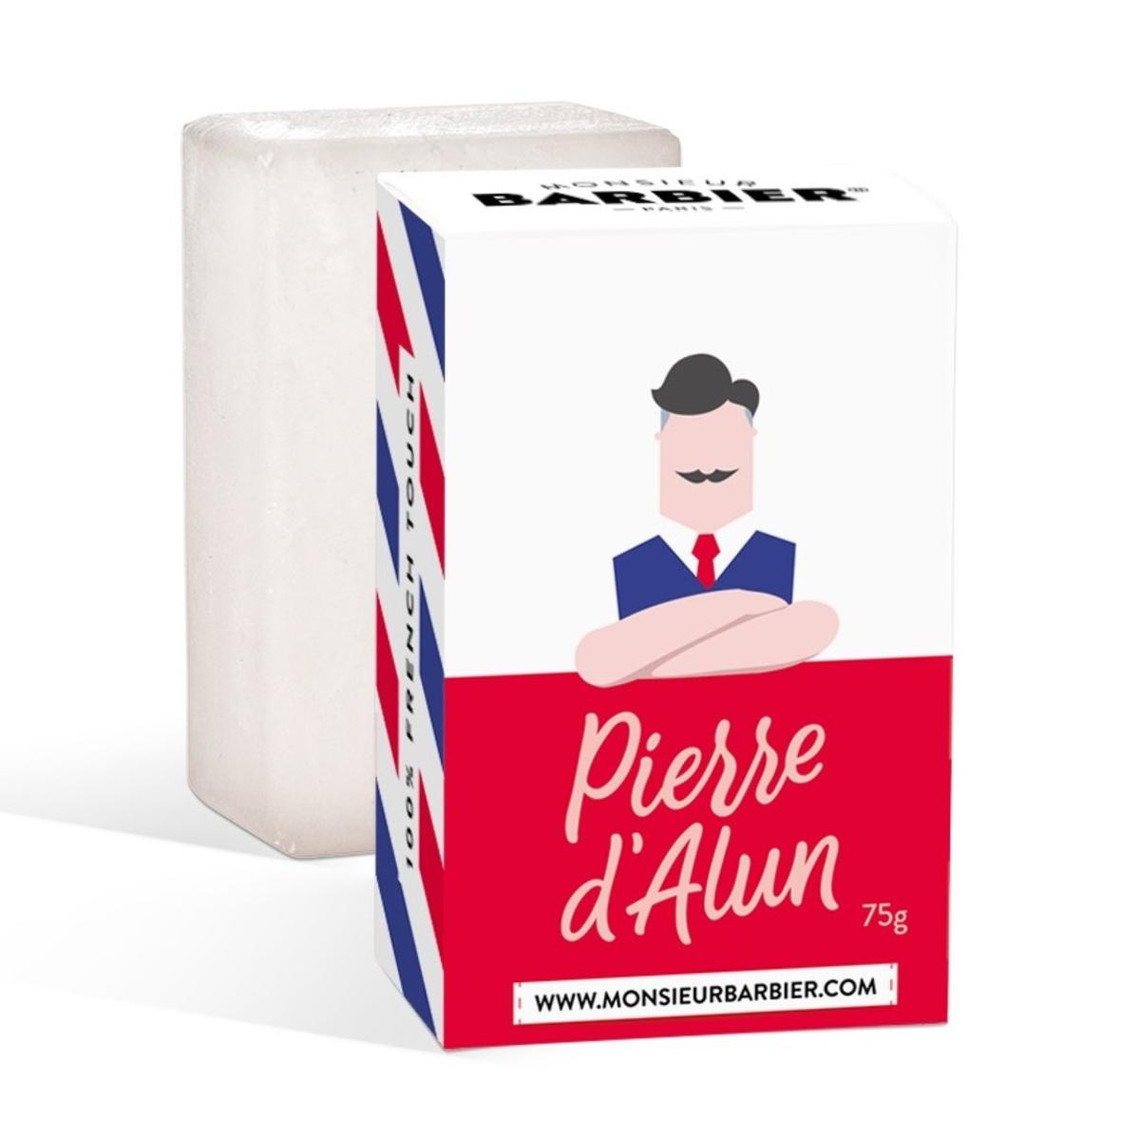 Pierre d'Alun 100% naturelle et made in France